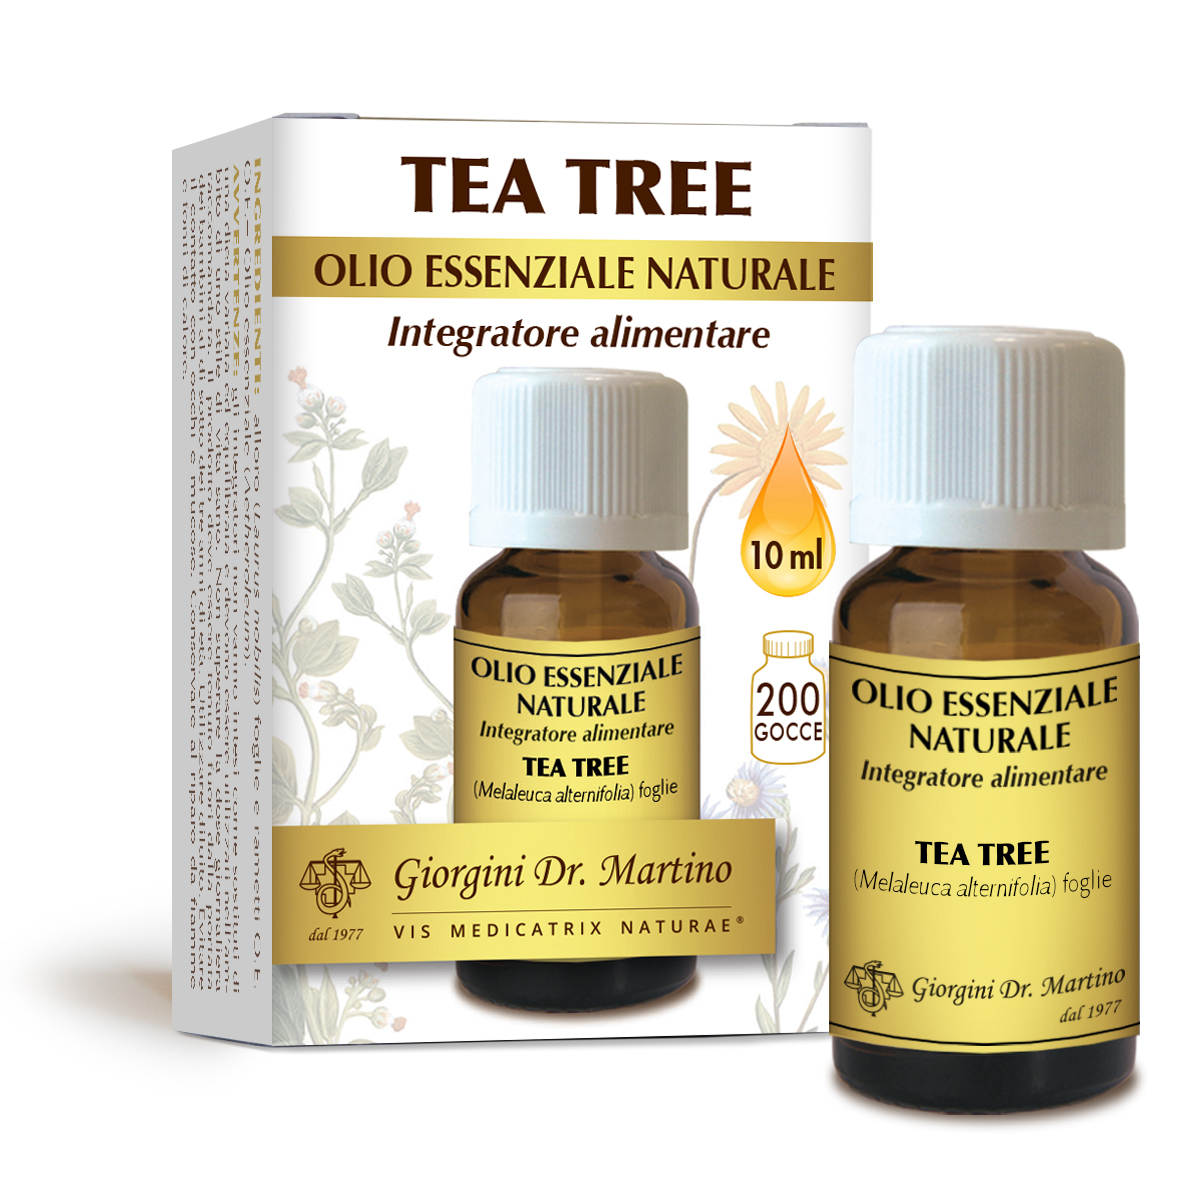 TEA TREE Olio essenziale naturale